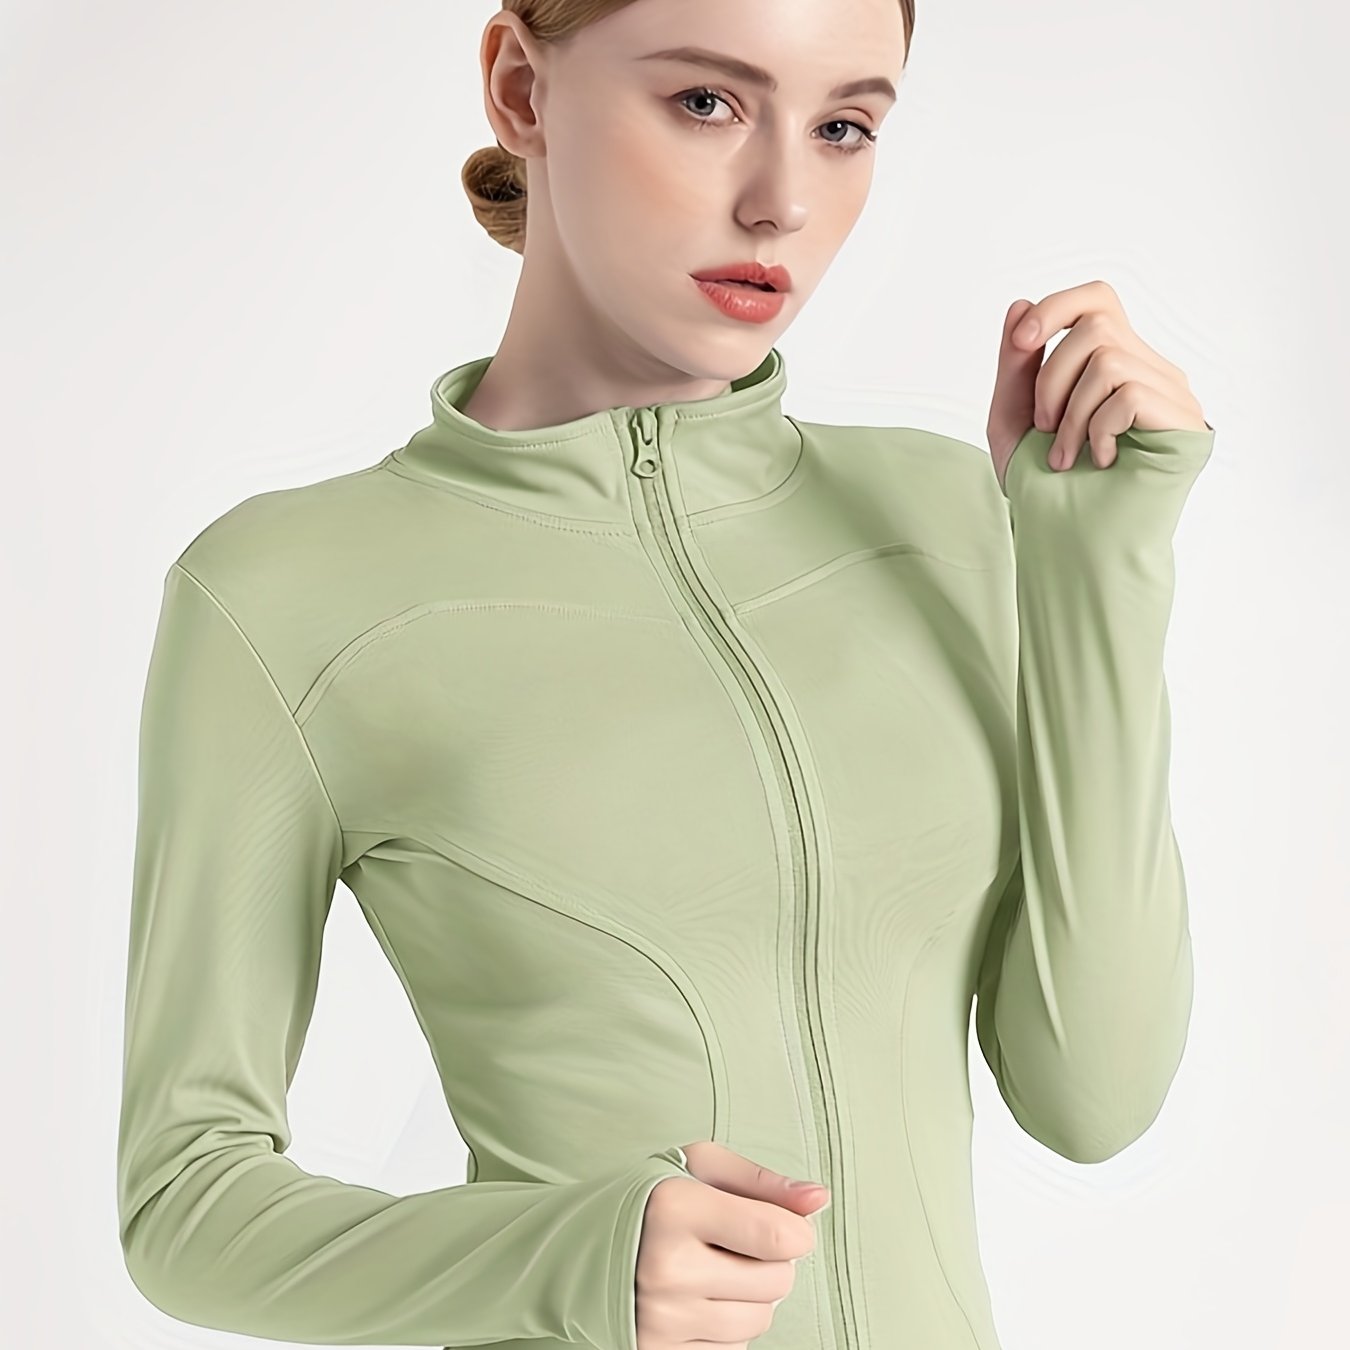 Antmvs Trendy Women's Long-sleeved Tight Sunscreen Yoga Suit, Stylish Fitness Running Yoga Sports Jacket